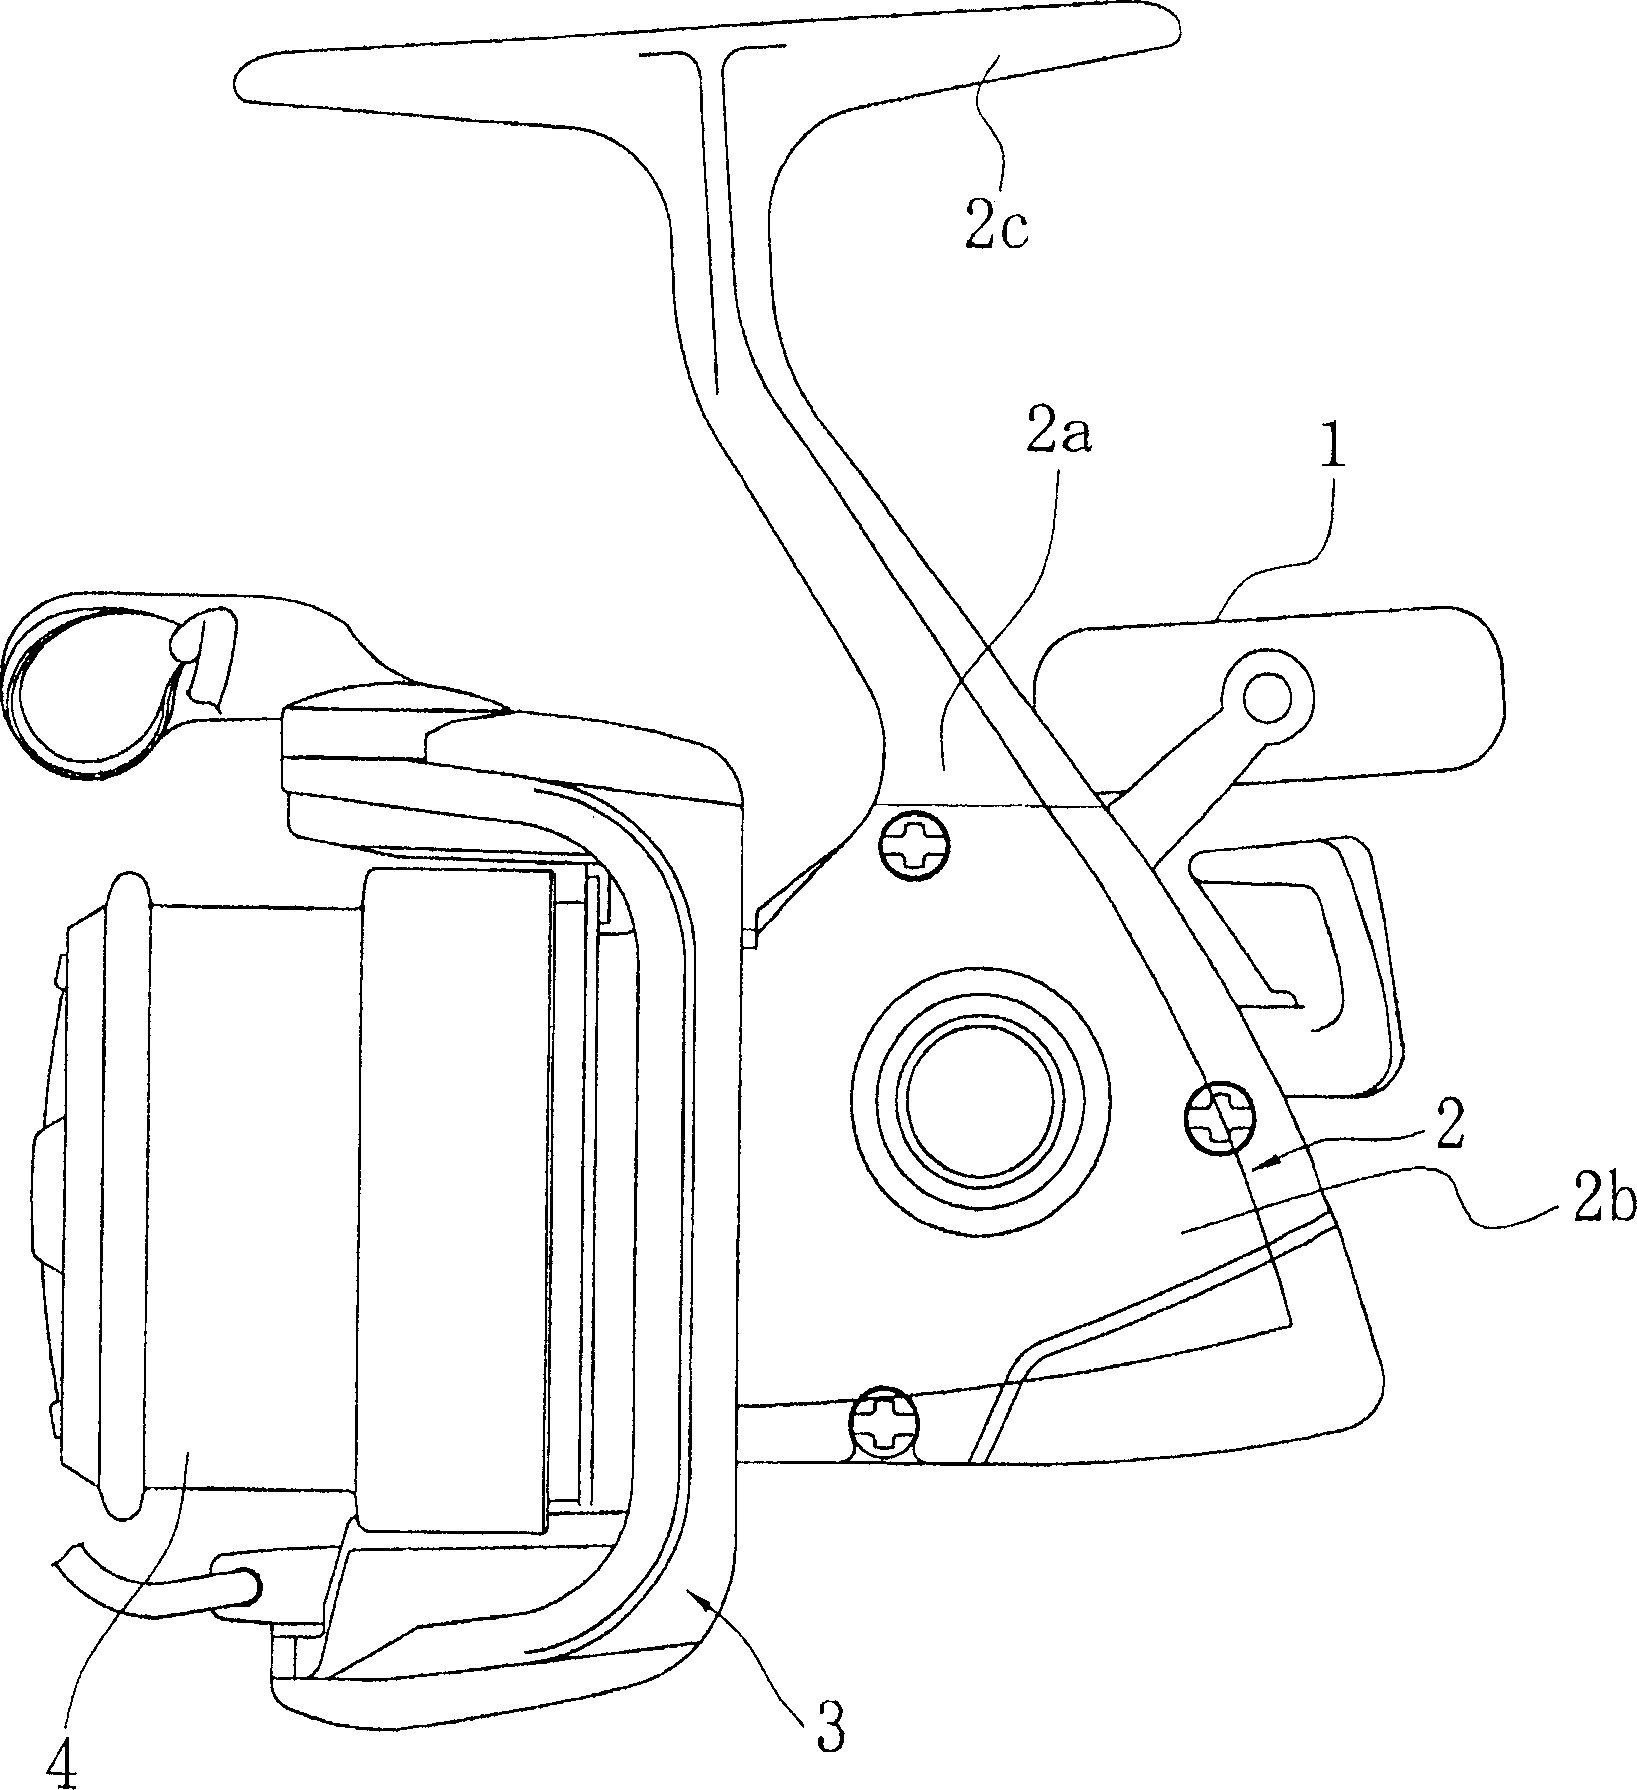 Rotor brake of rotating reel